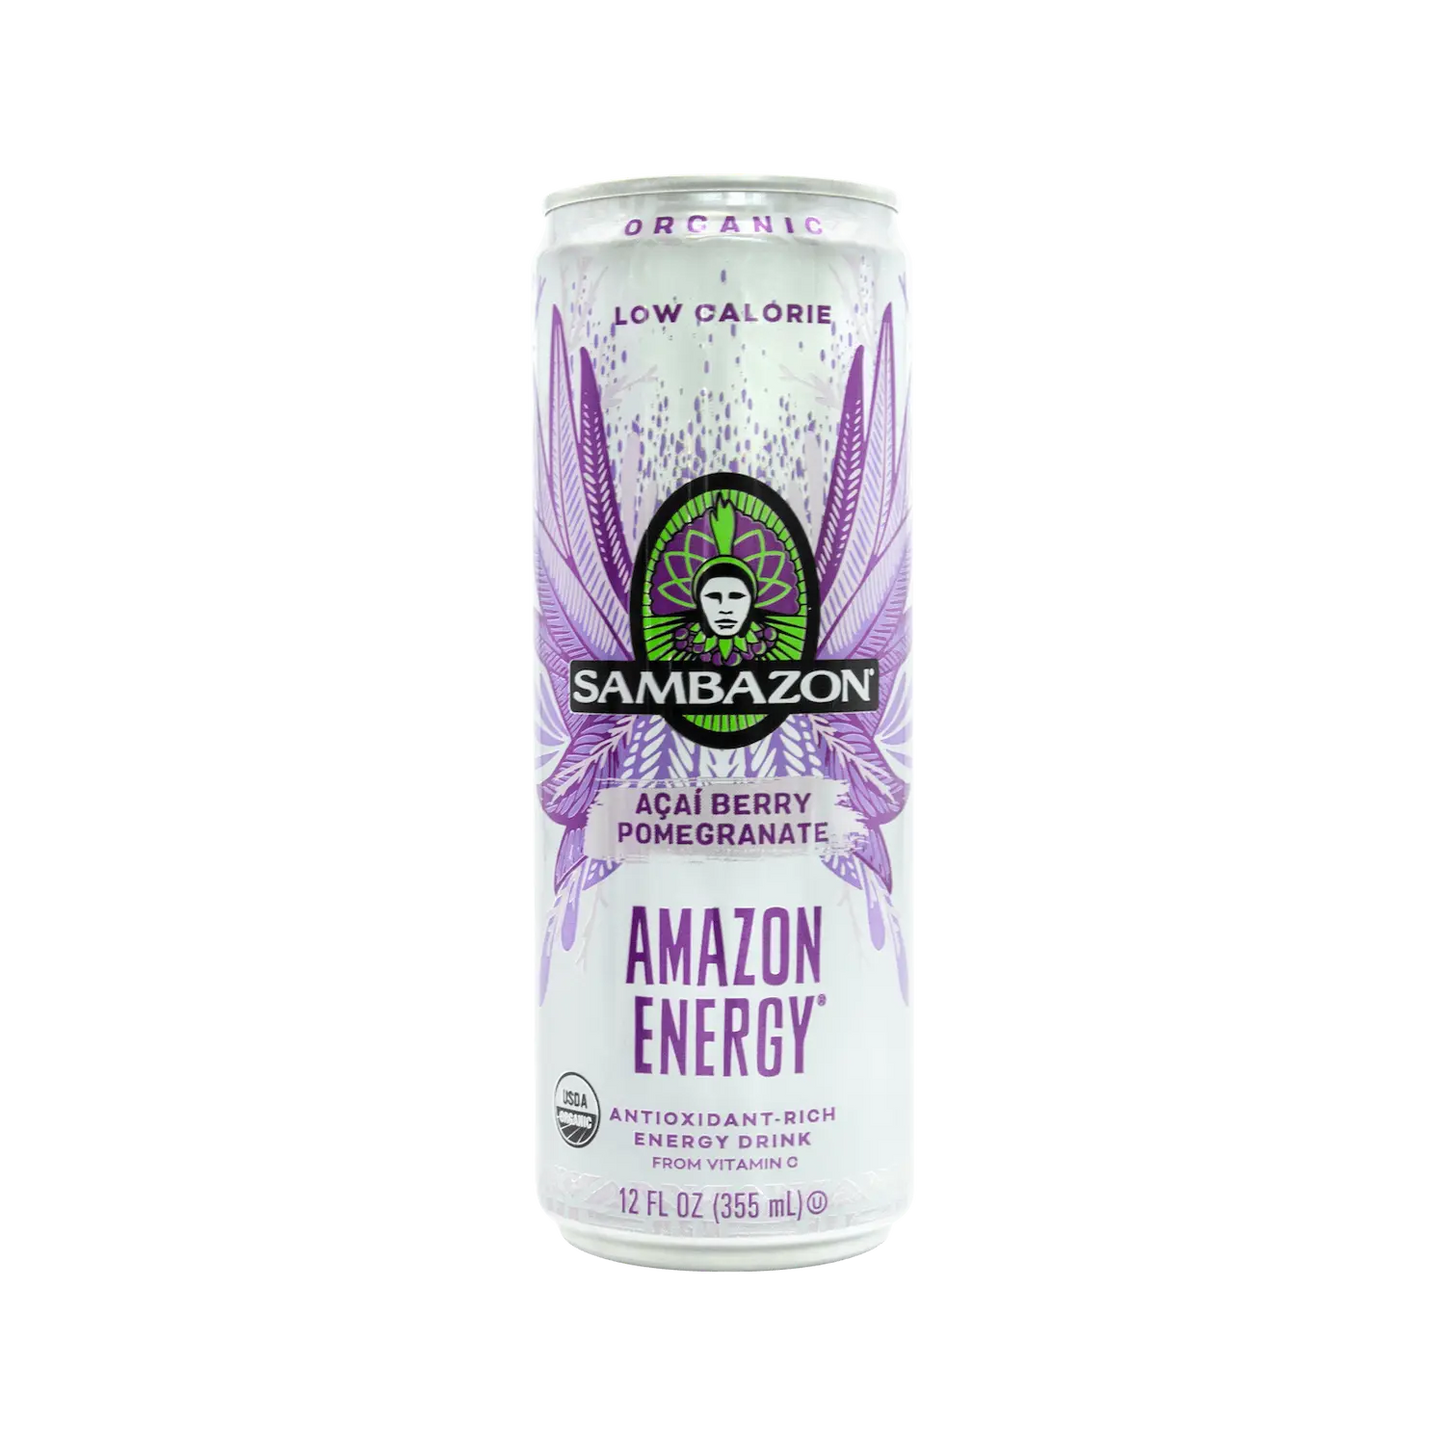 Low Calorie Açaí Pomegranate Amazon Energy Drink